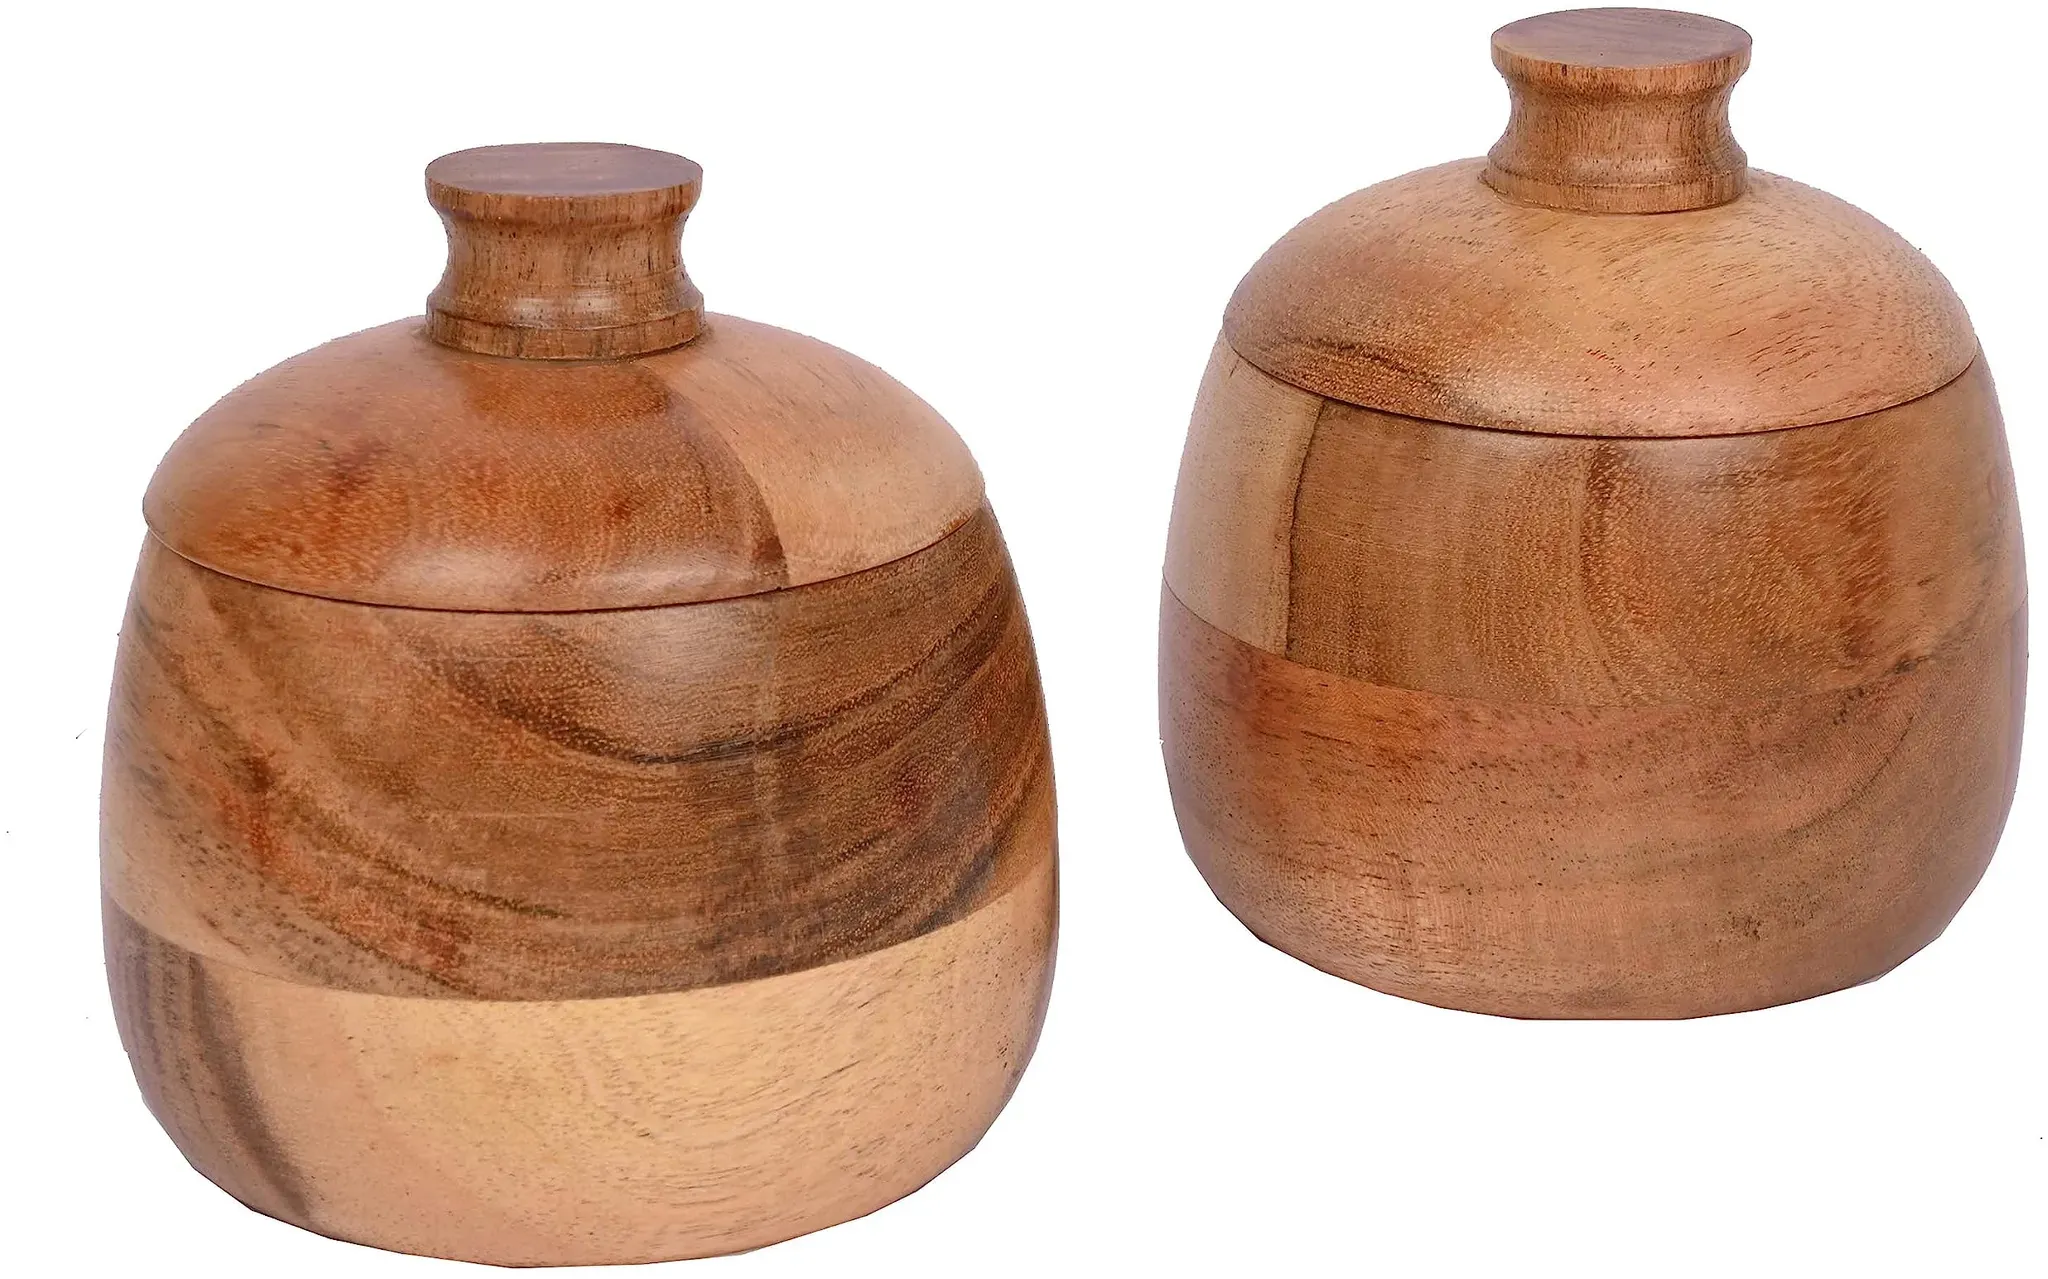 EDHAS Round Acacia Wood Condiment Pot With Lids, for Salt Sugar Pepper or Chili Powder, Set Of 2 for Kitchen, Serving, Condiment, (7.62cm x 7.62cm x 10.16cm)